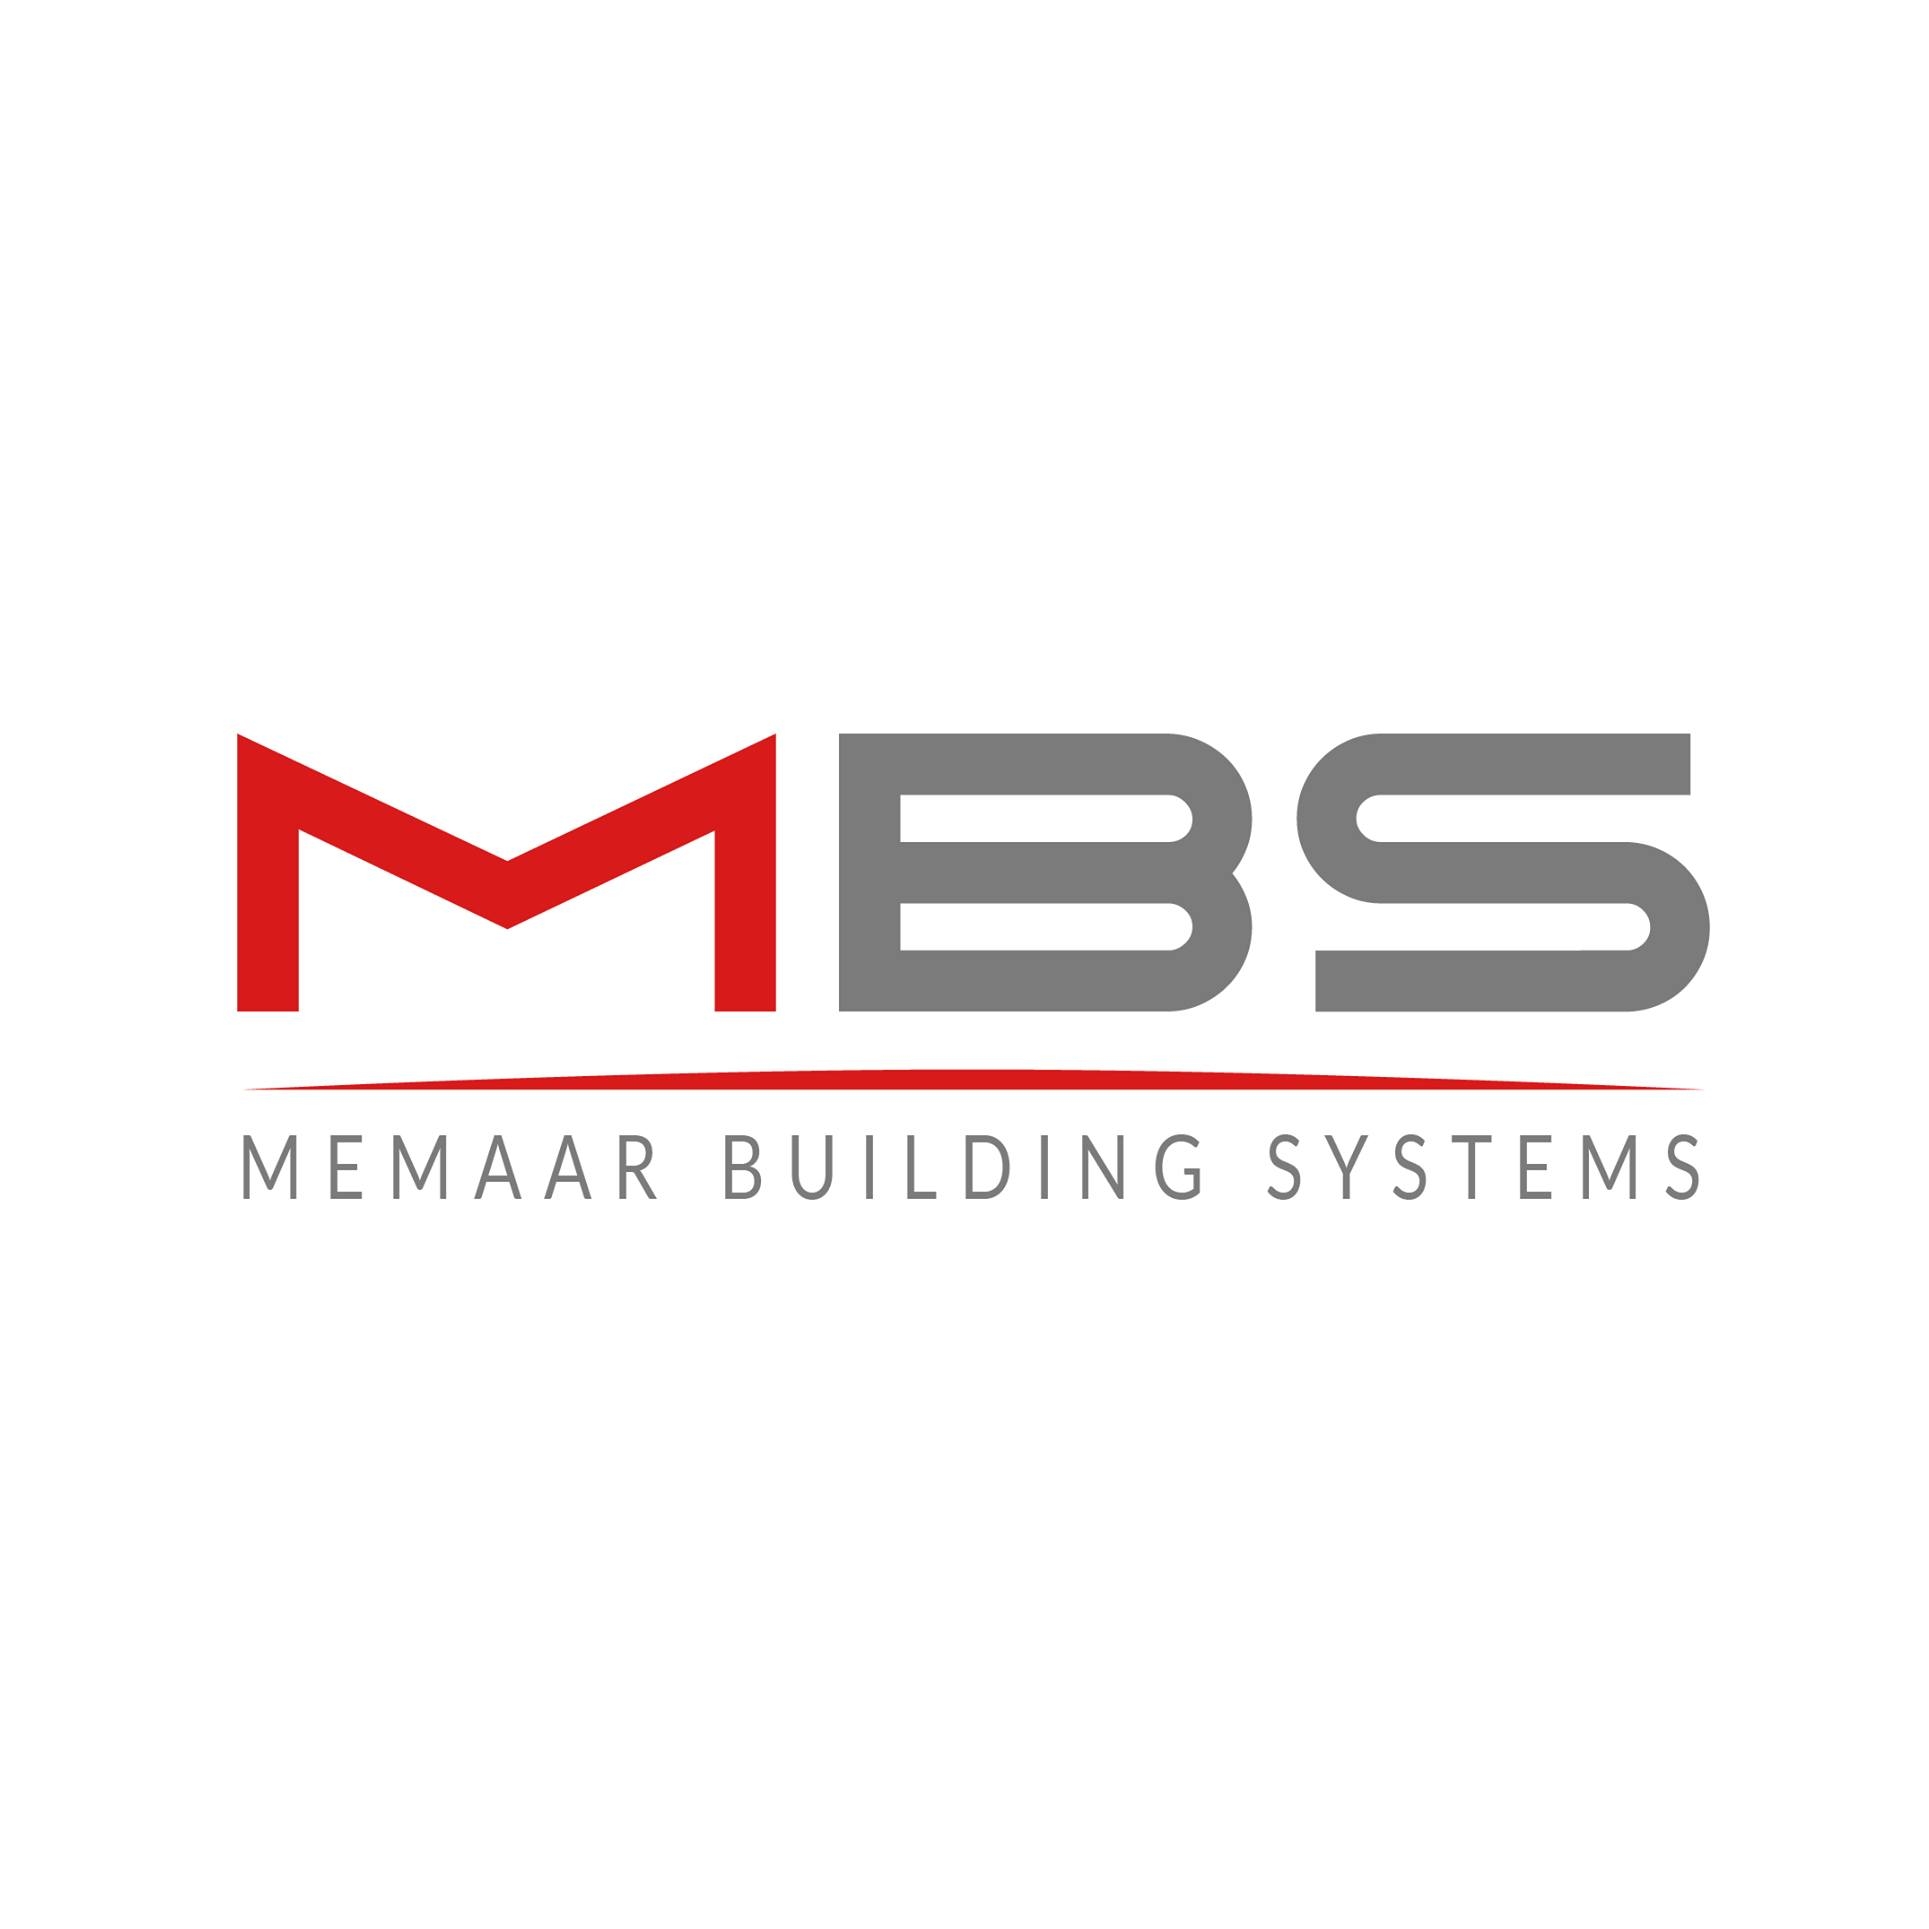 Memaar Building Systems